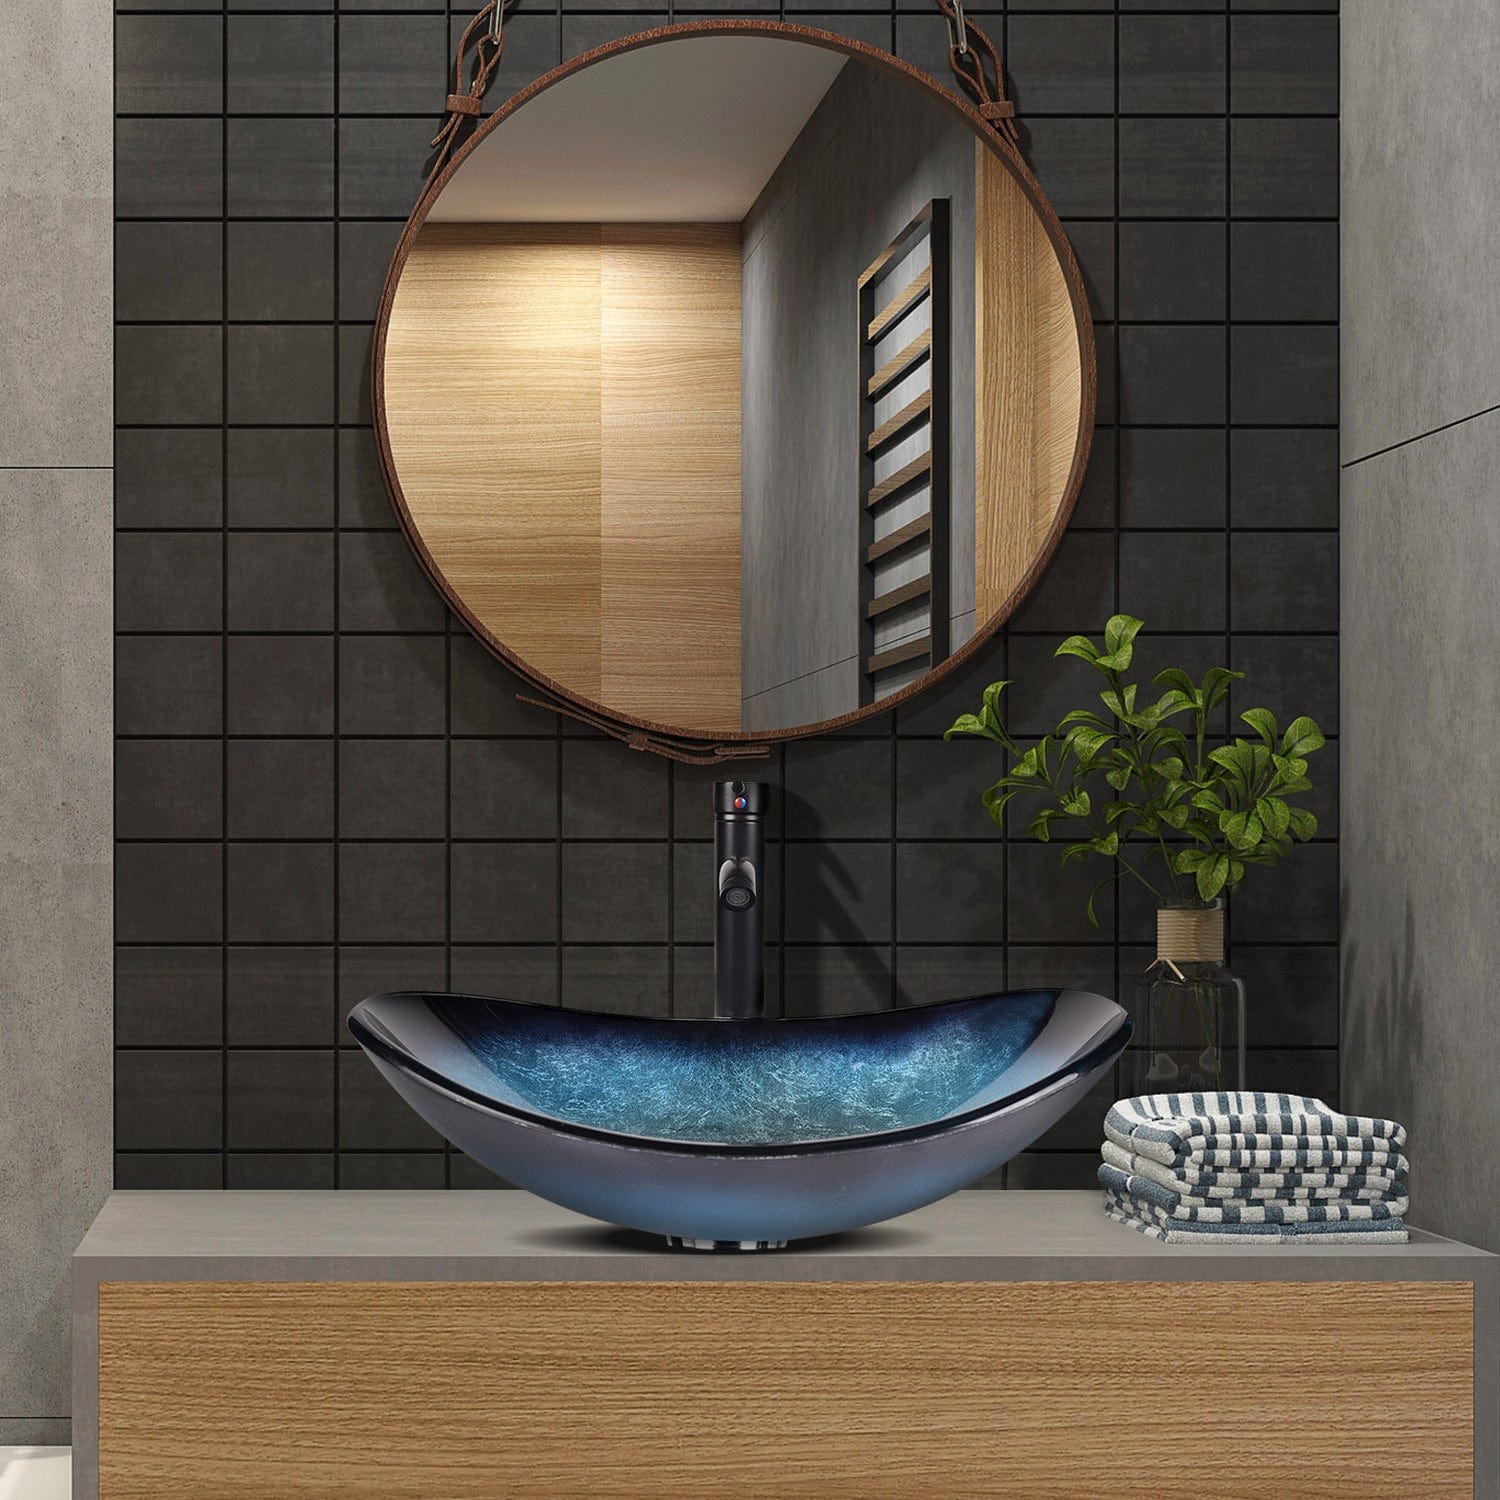 Elecwish Vessel Sinks Bathroom Artistic Glass Vessel Sink with Faucet Drain,Oval Ocean Blue